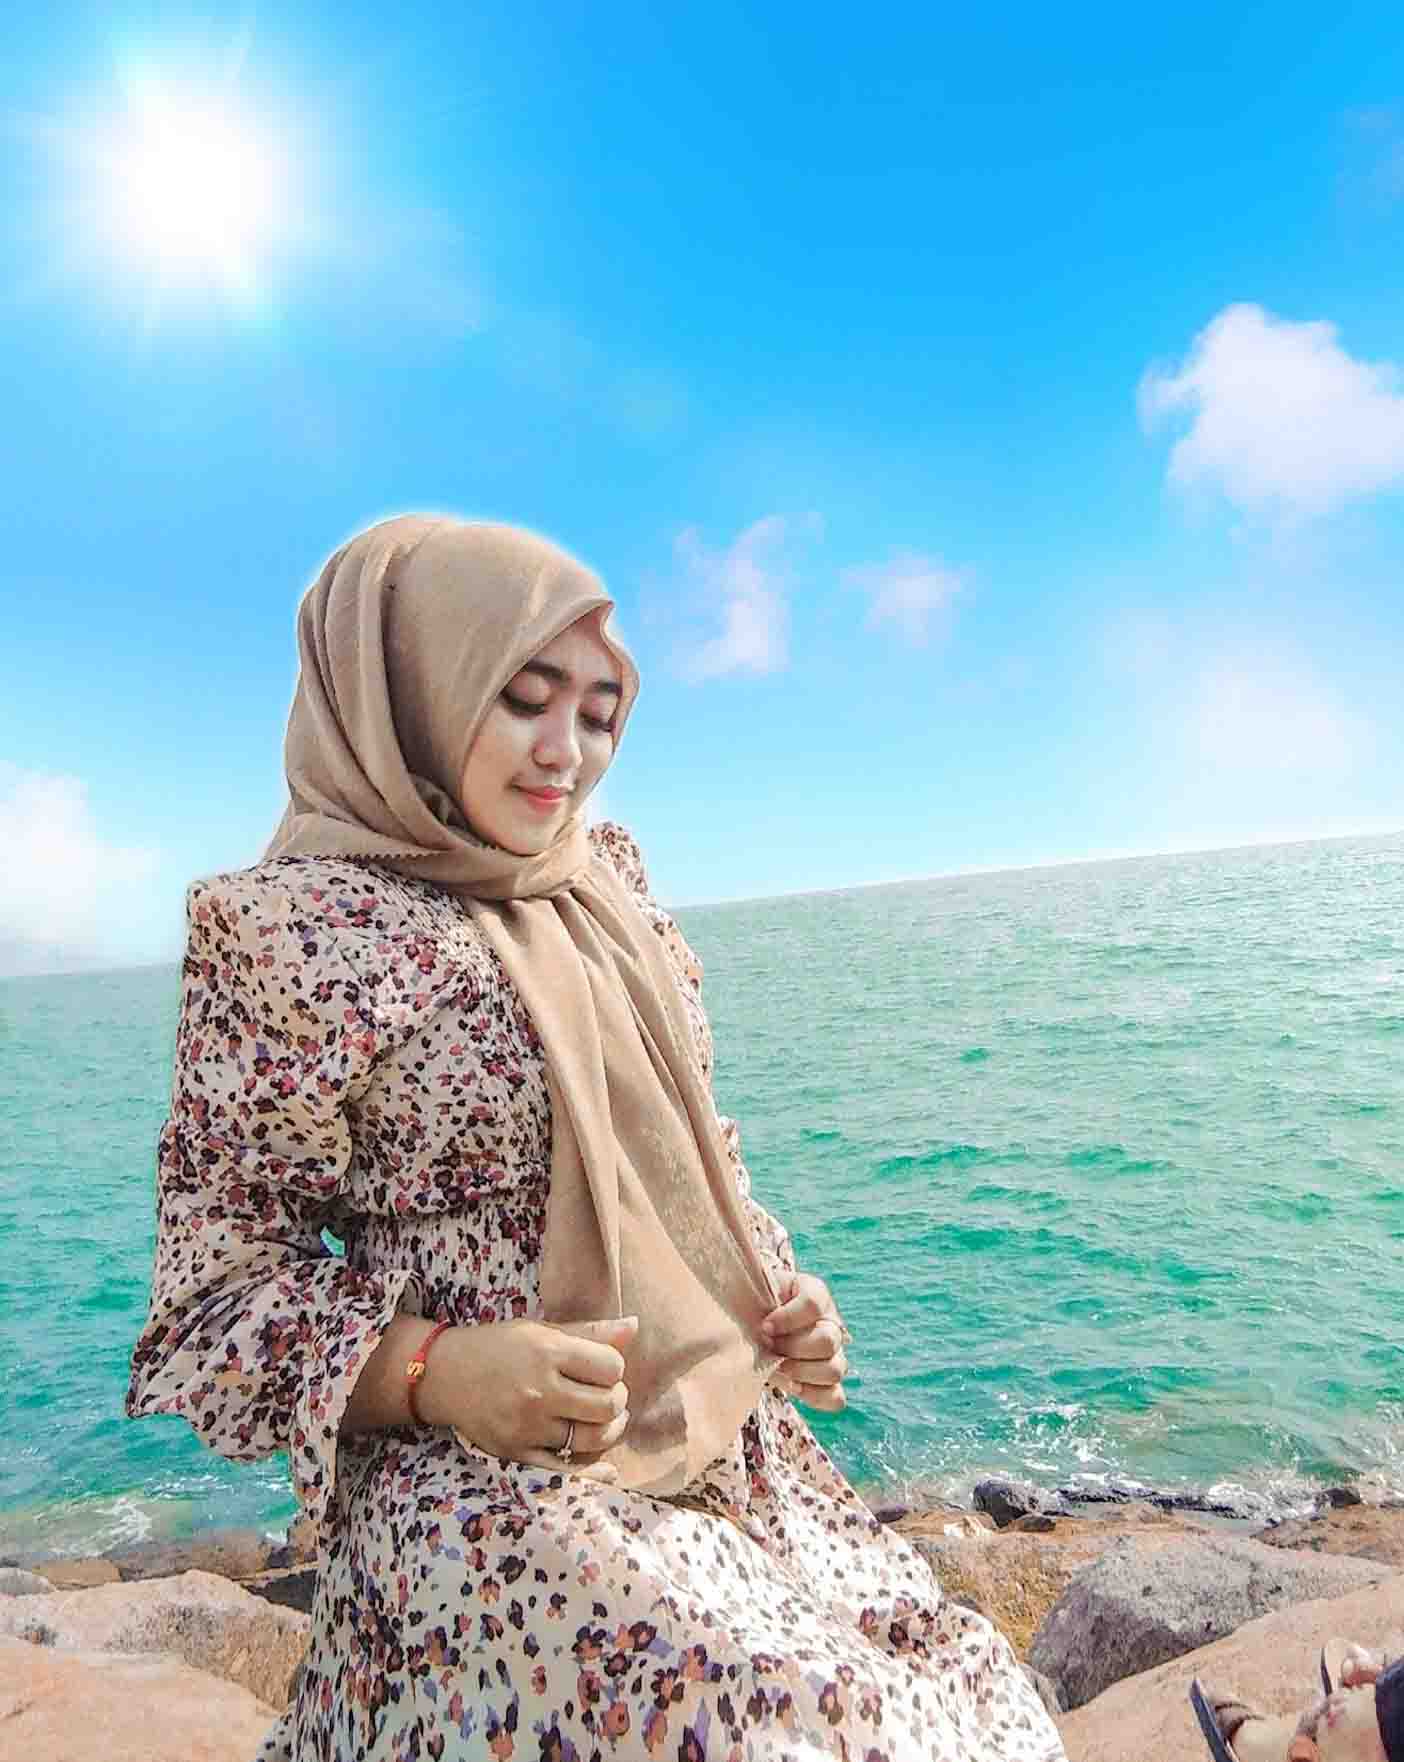 Pantai Cermin Ulee Lheue Aceh